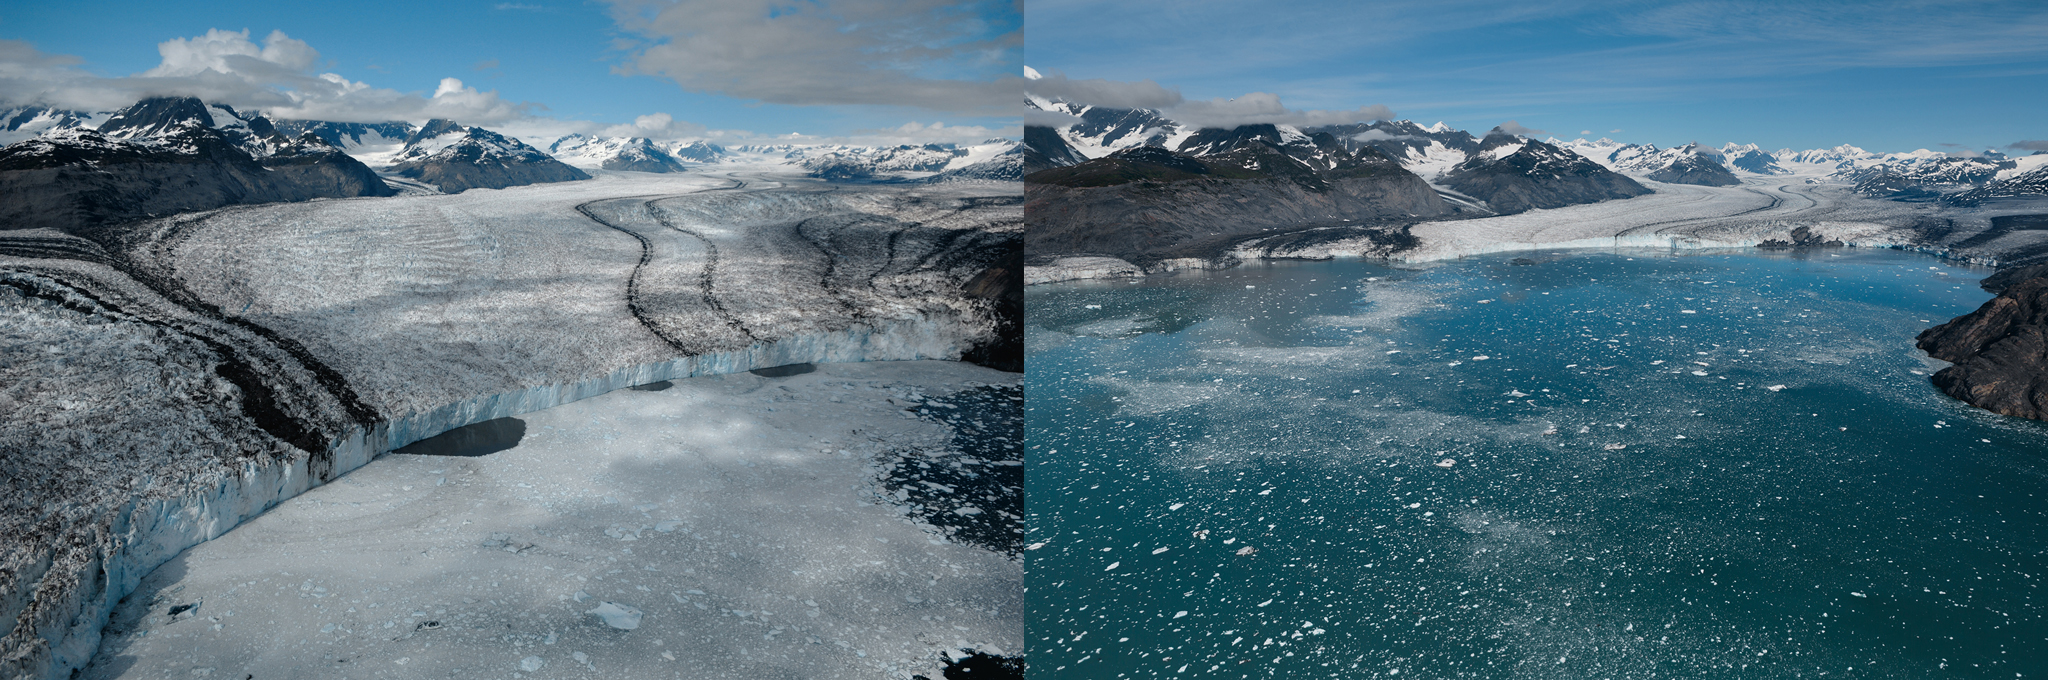 Courtesy of Balog: Columbia Glacier, Alaska from 2006 to 2012